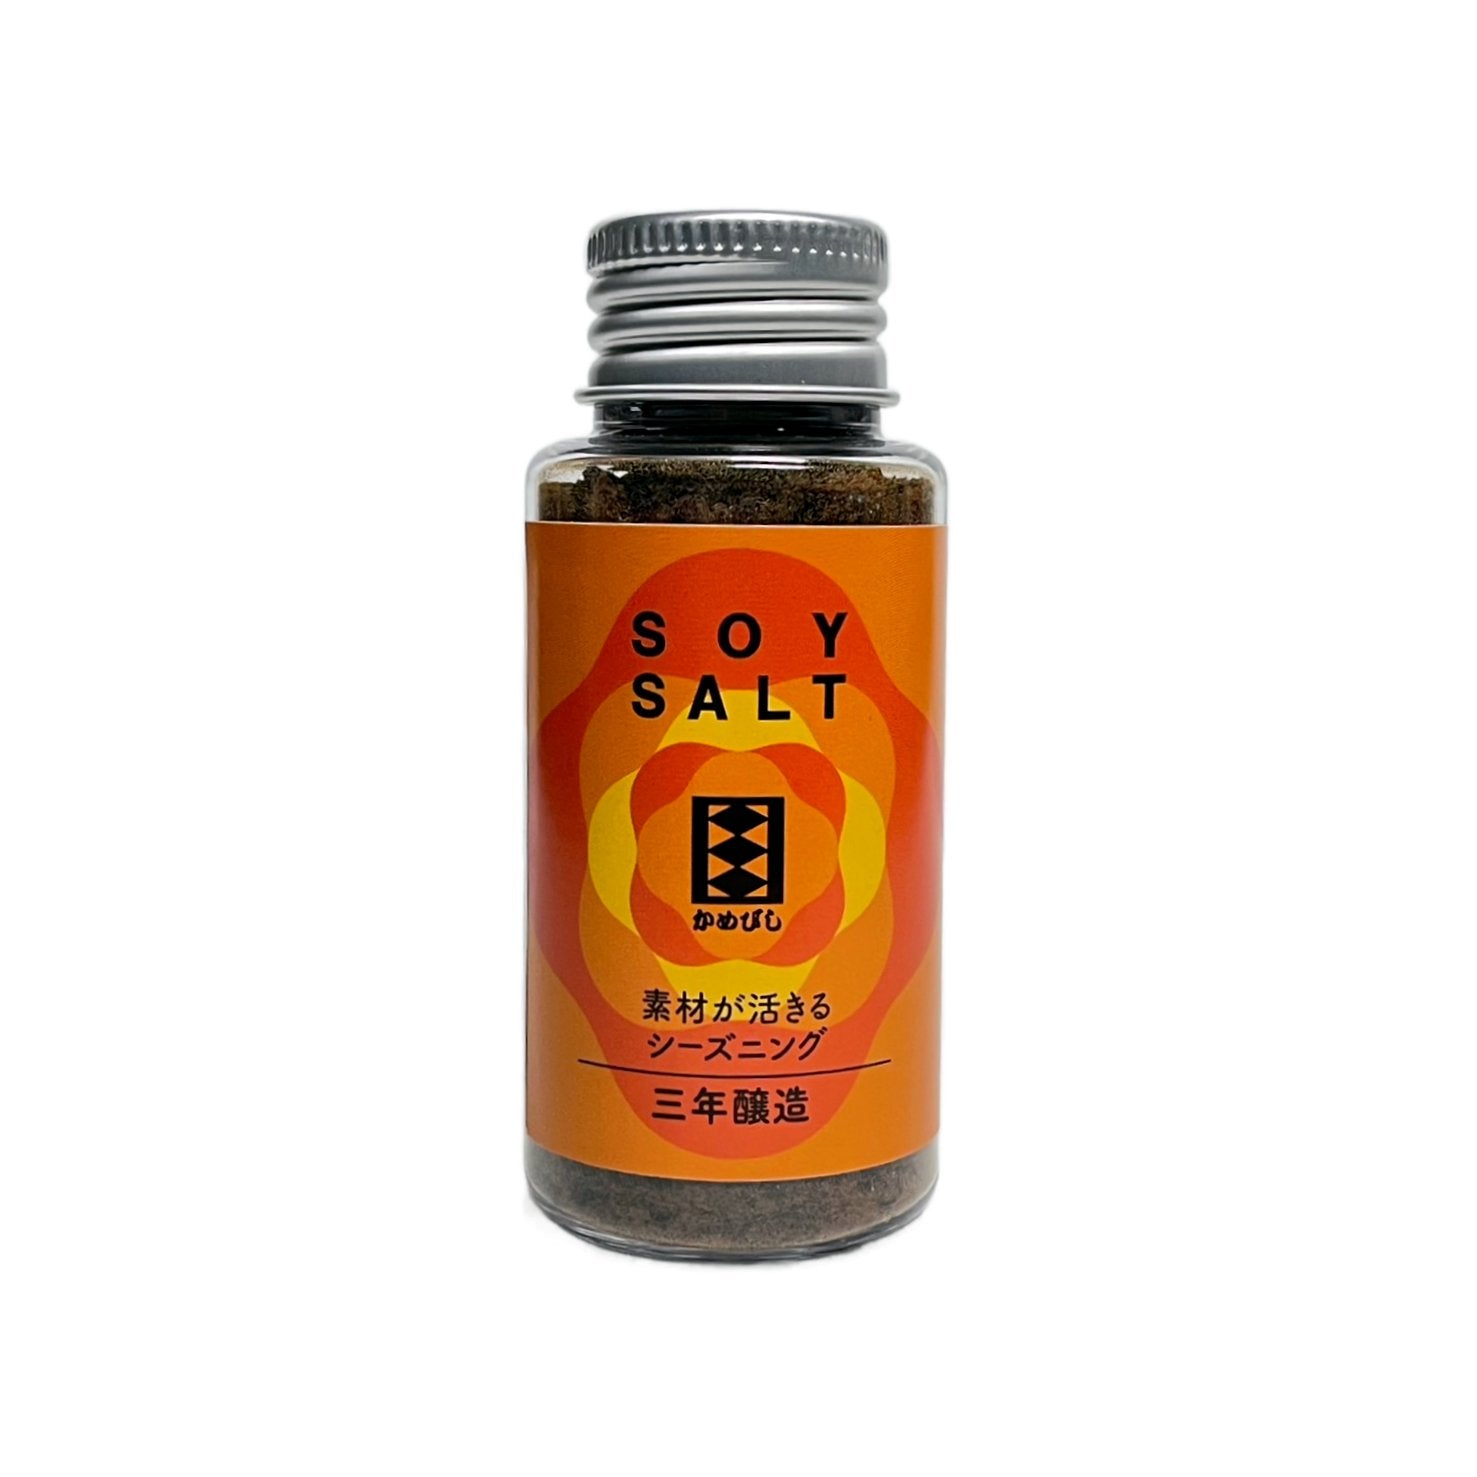 Kamebishi Soy Sauce Salt 3 - Years Aged Natural Condiment 25g